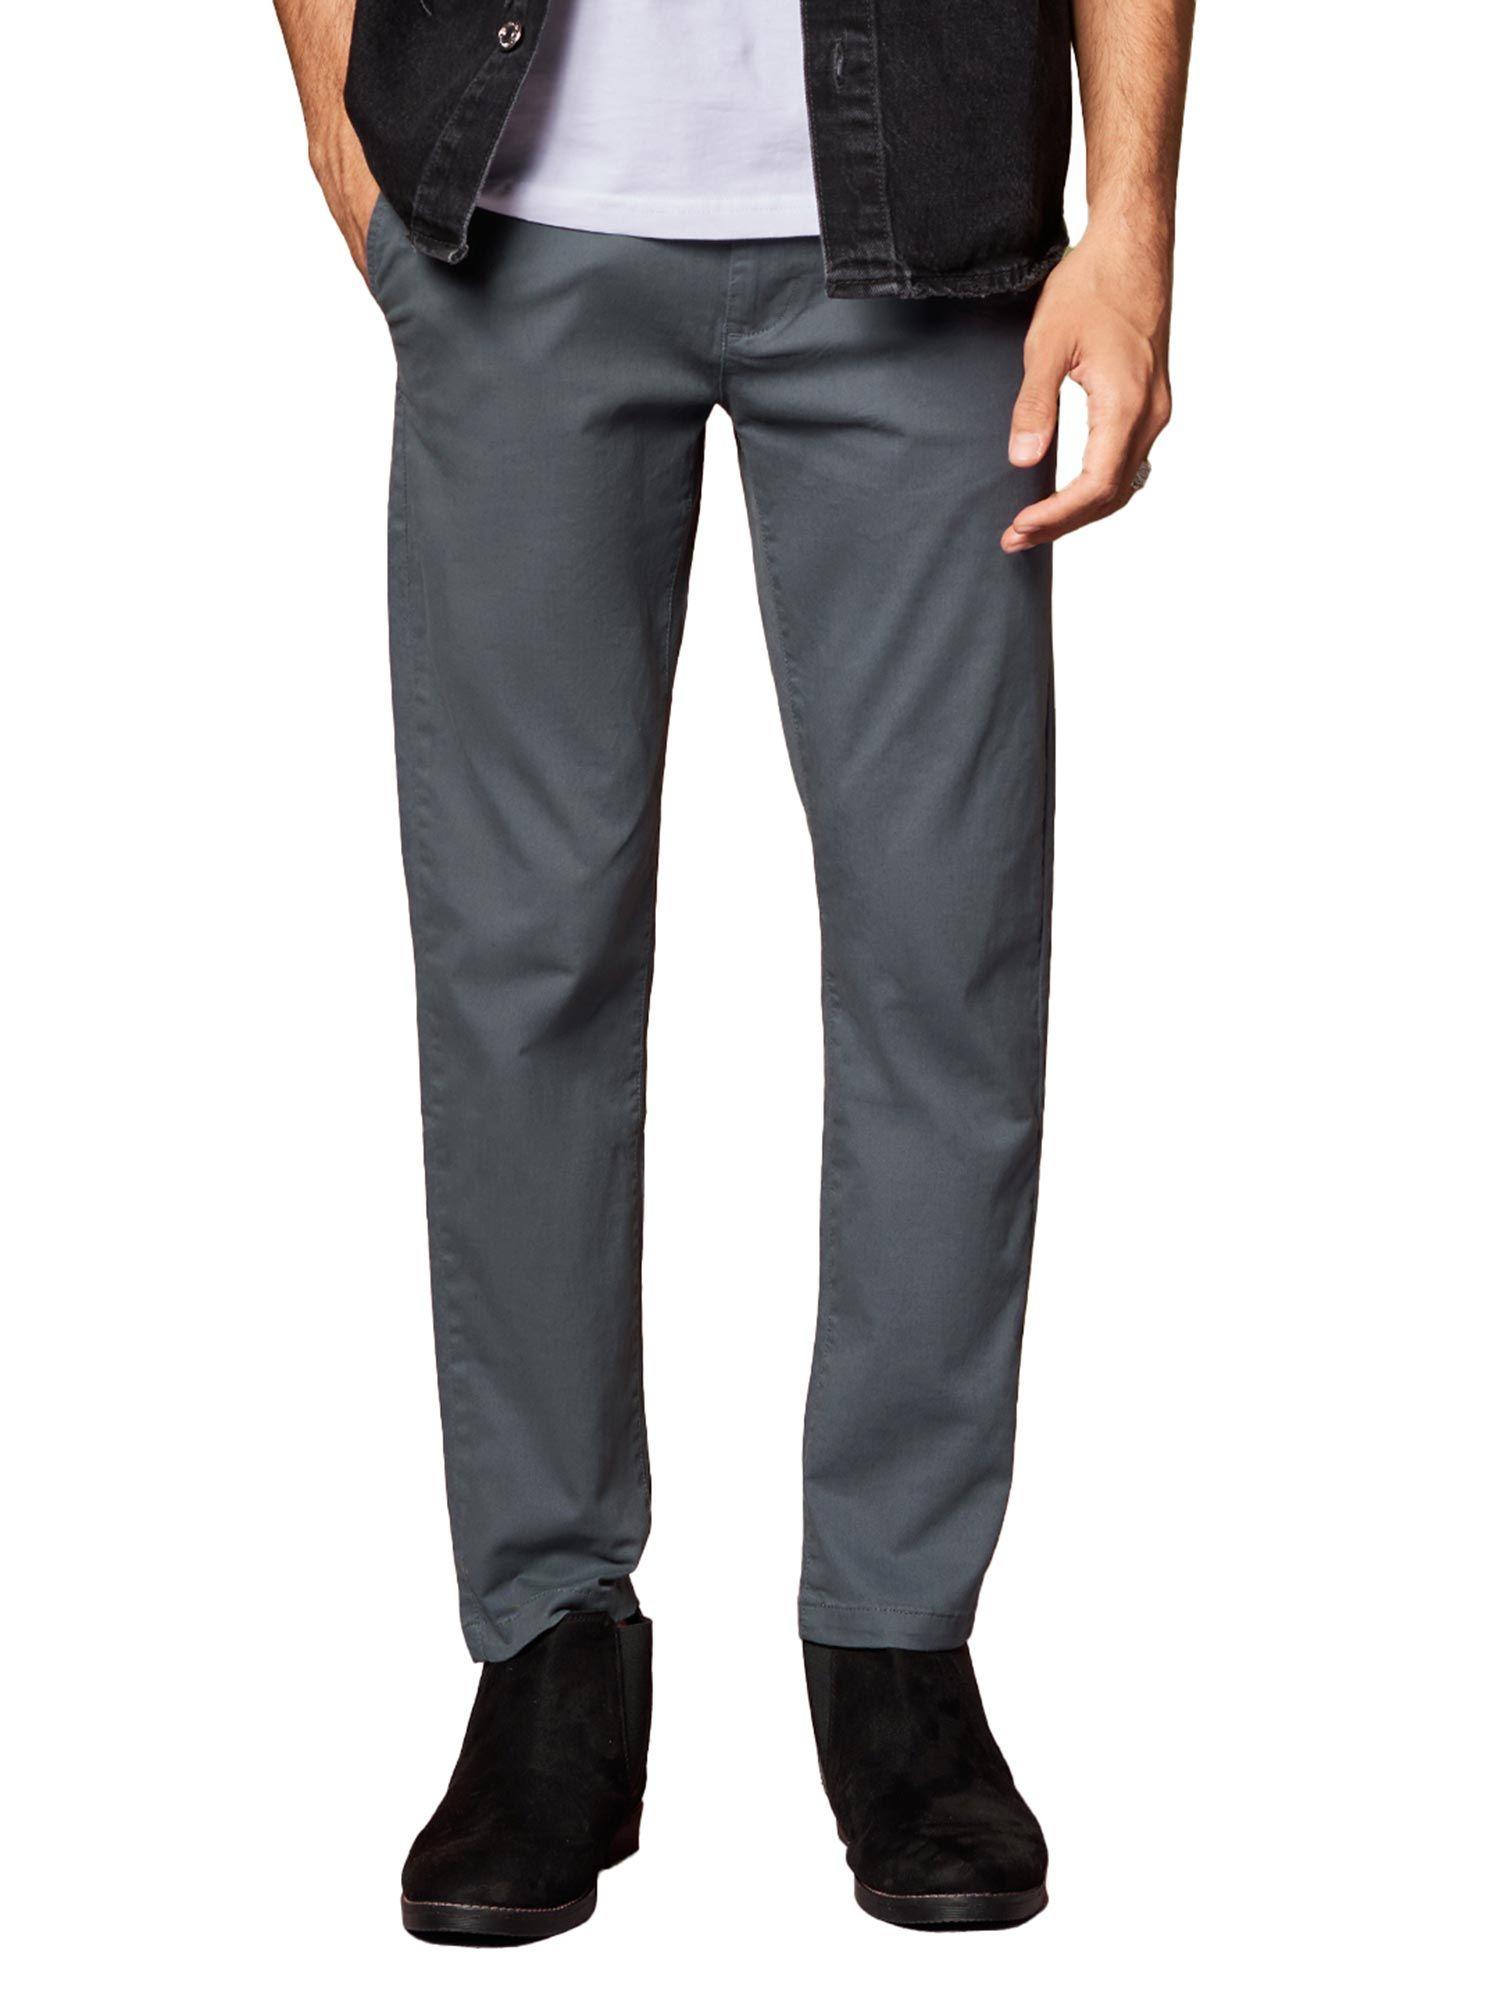 original solids- dark grey chino pants